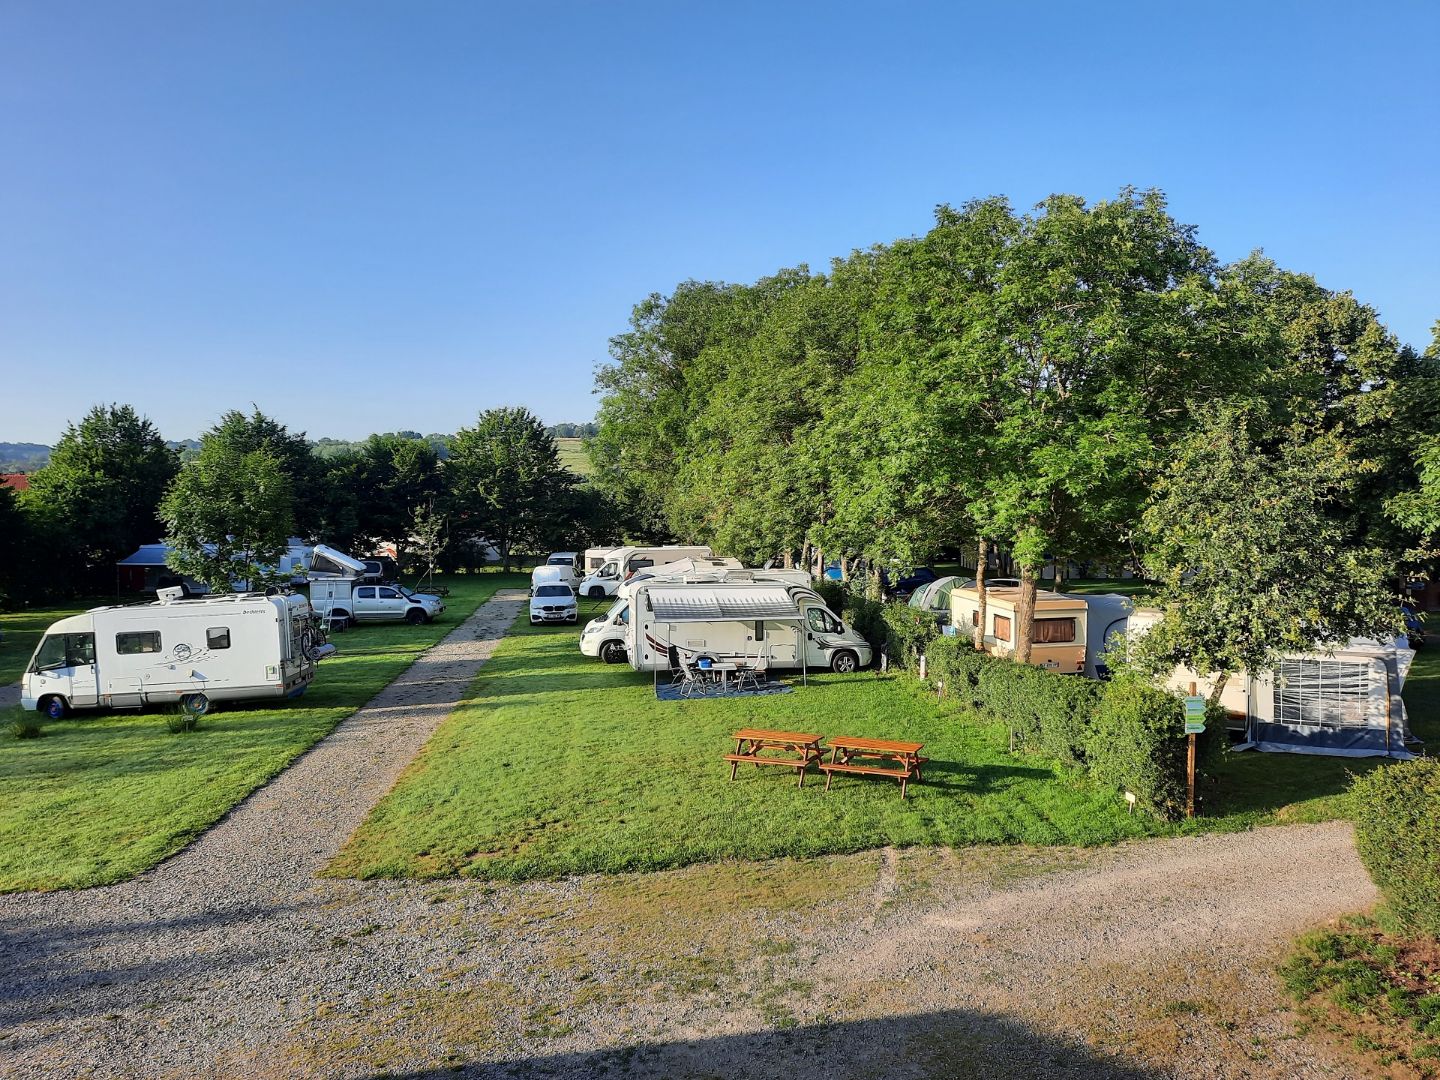 Terrain camping, caravane, camping-car